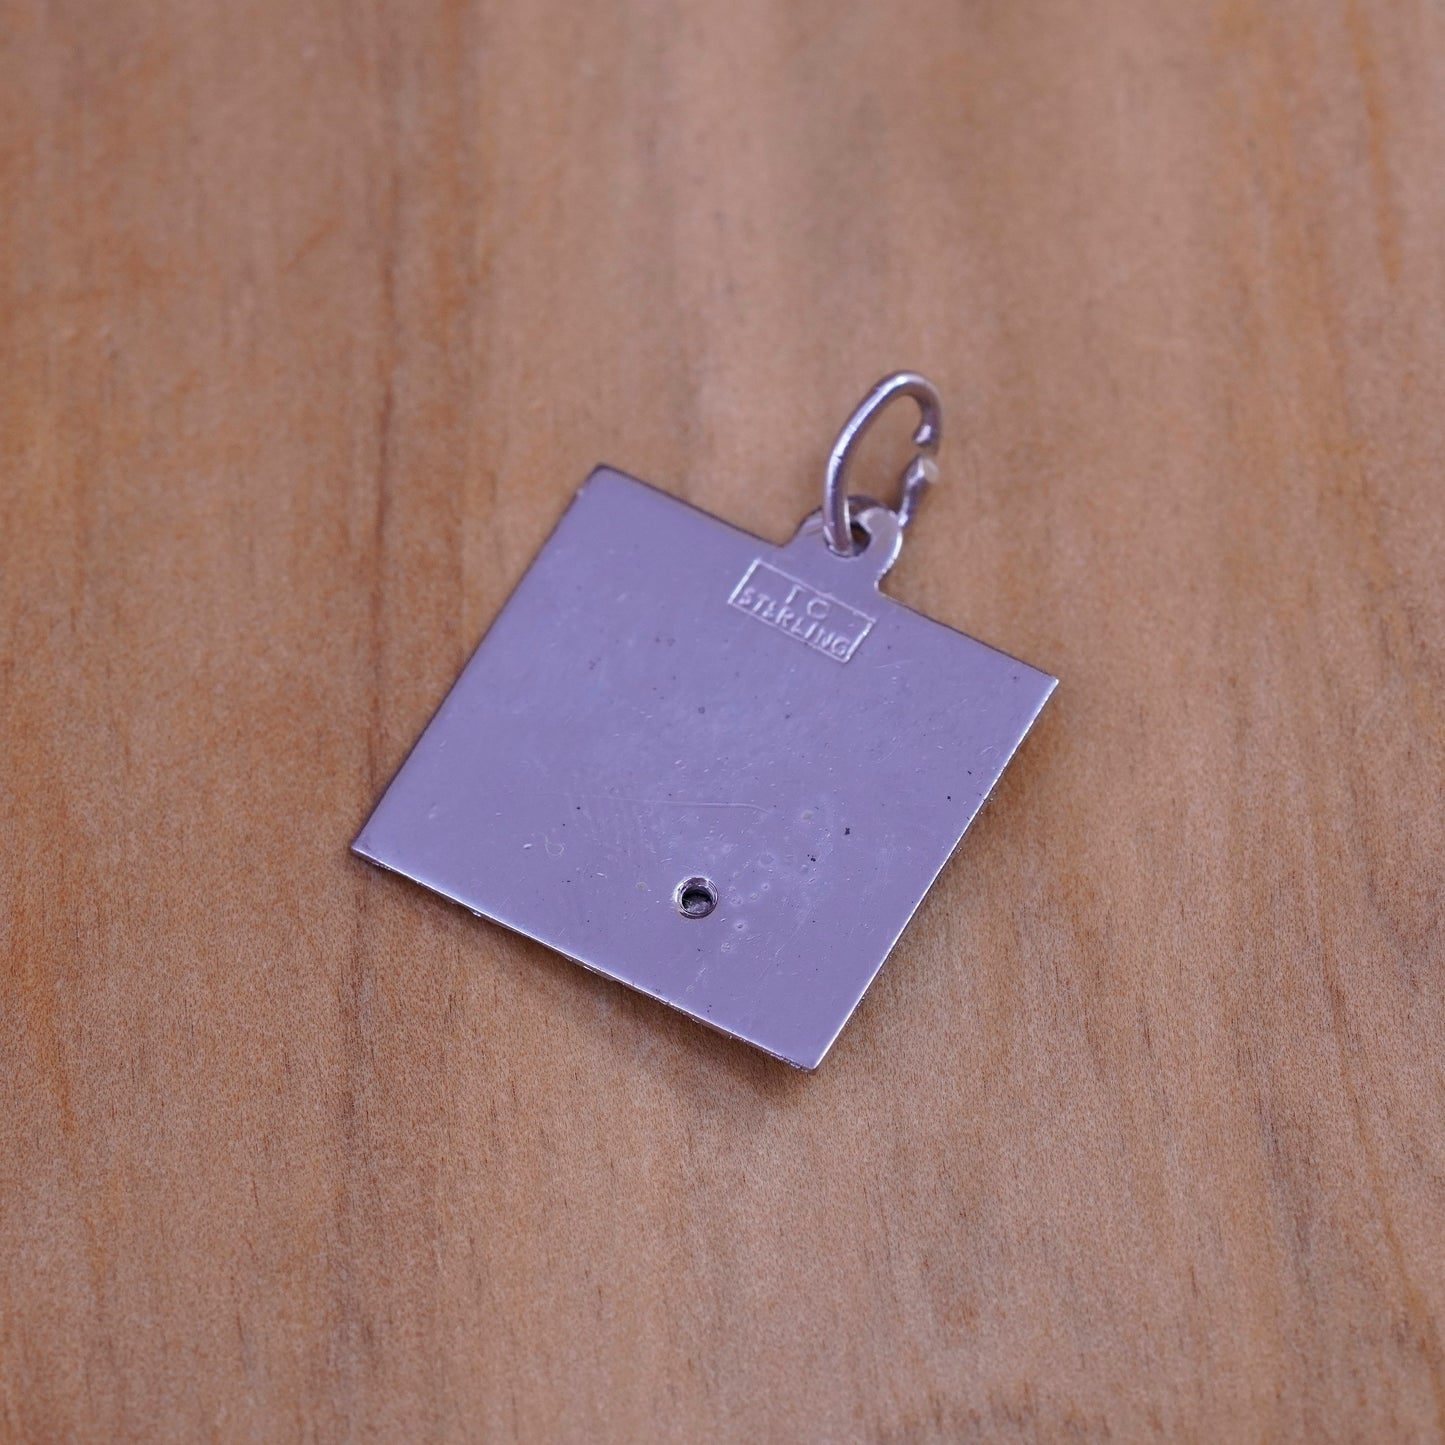 sterling silver handmade pendant, 925 19 03 Calendar charm birthstone amethyst